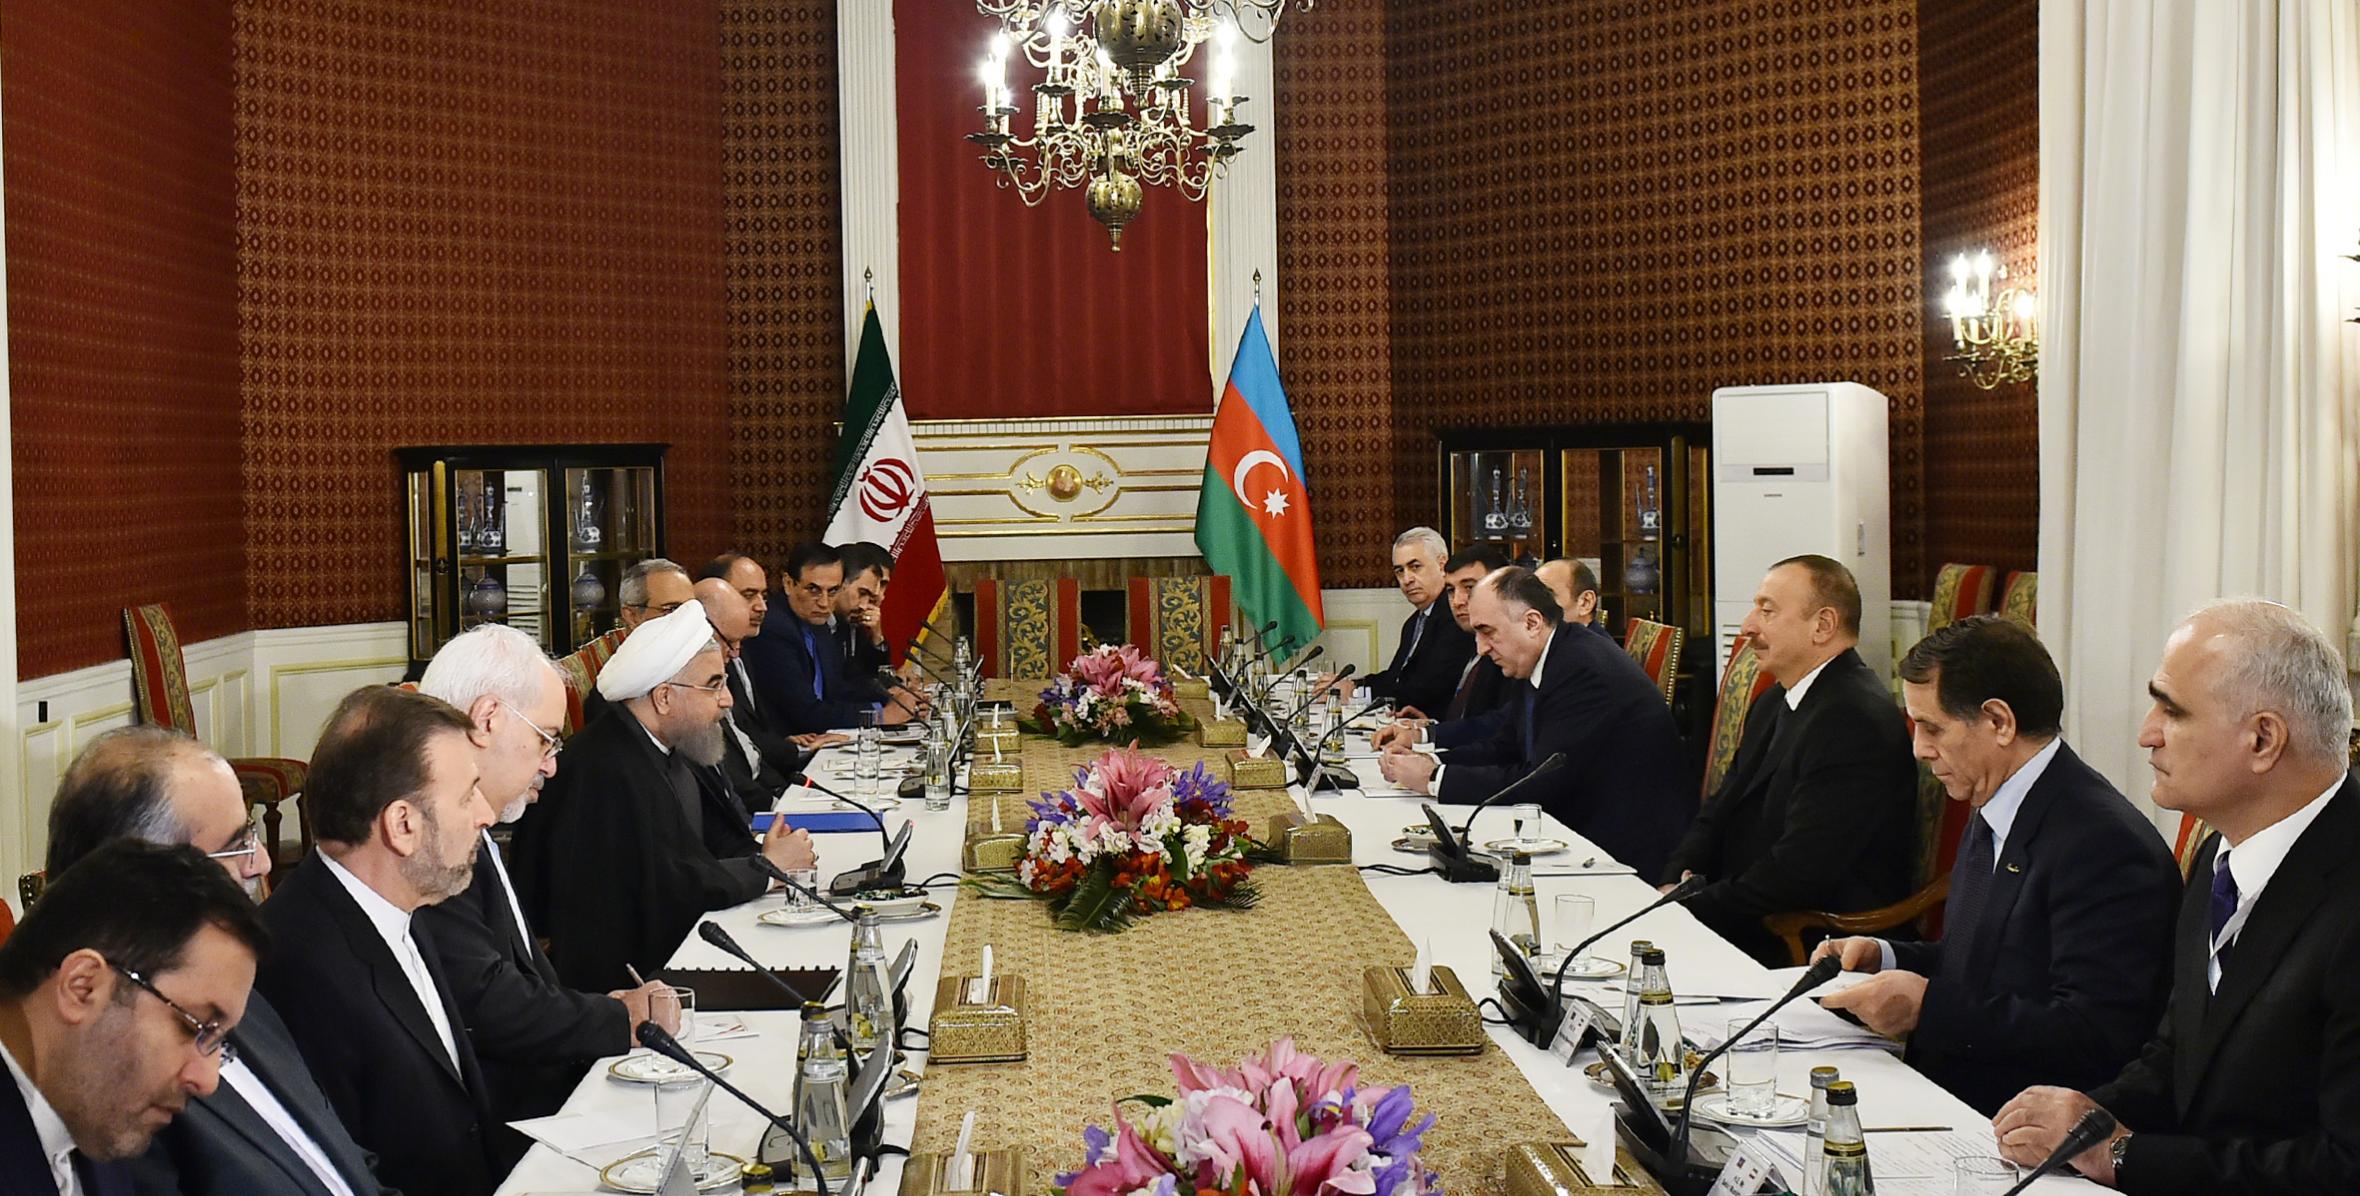 Presidents of Azerbaijan and Iran held expanded talks